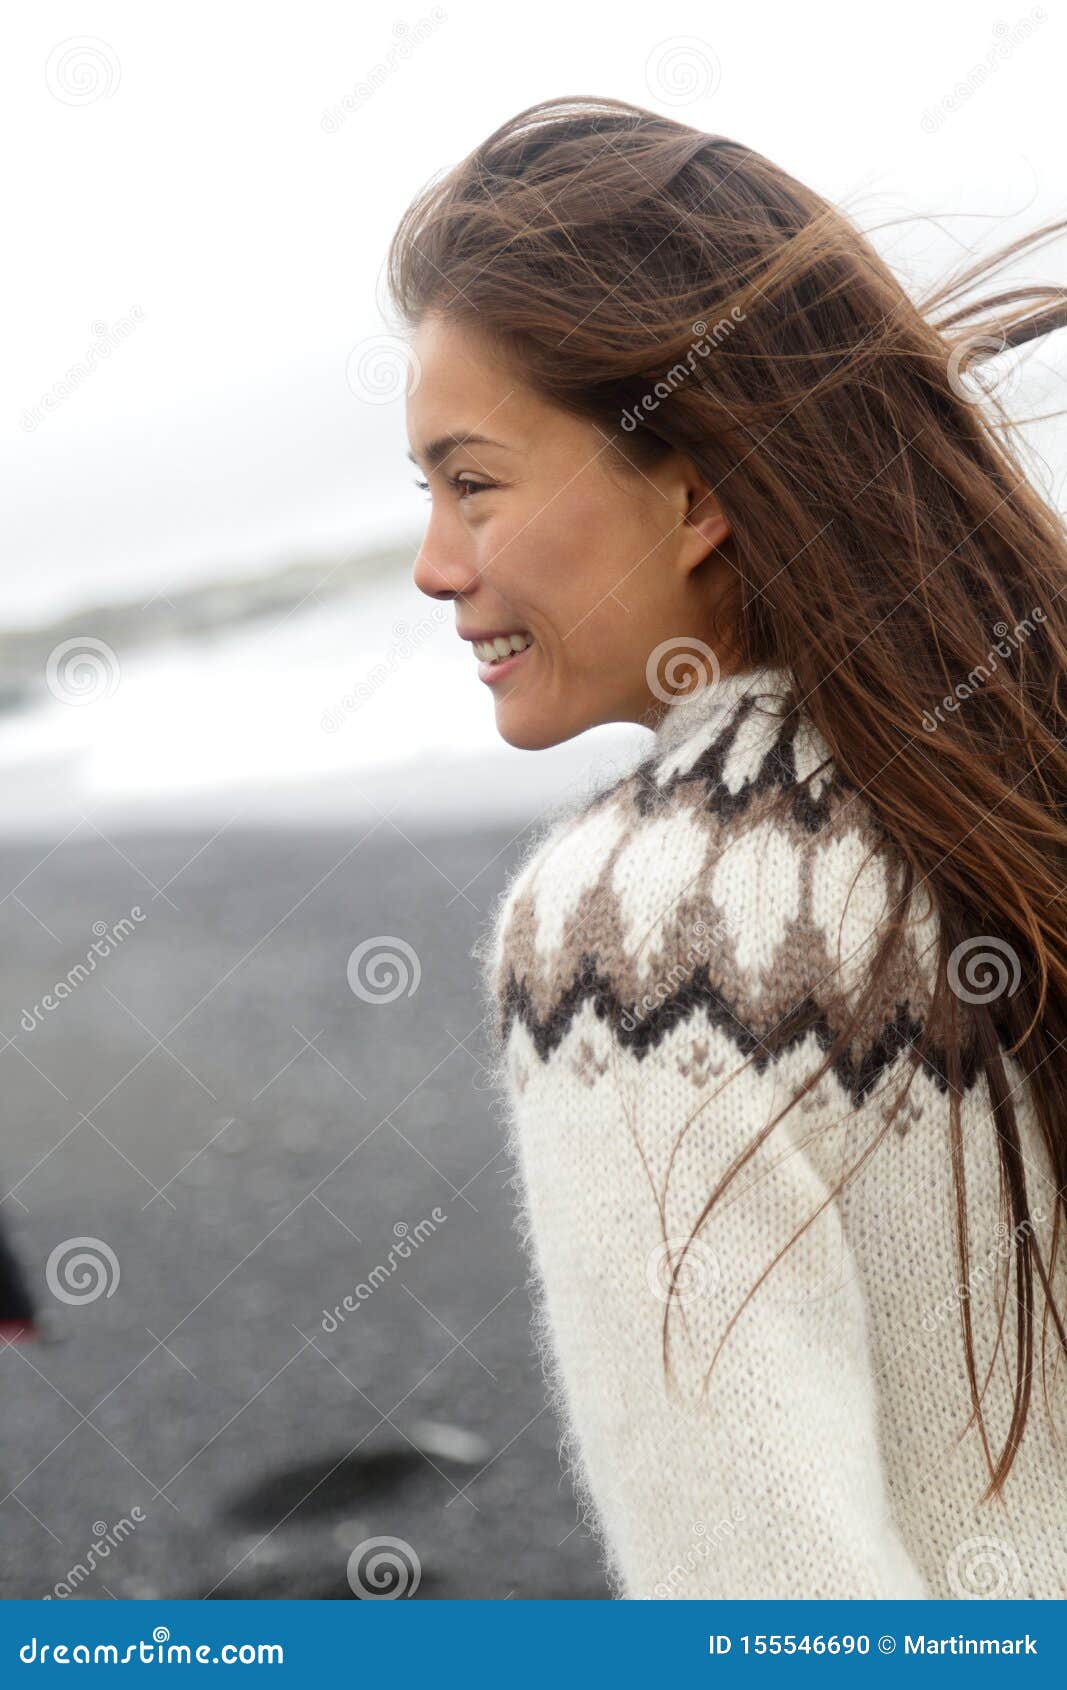 Winter Iceland Sweater Asian Woman Model Wearing Traditional Wool Knit ...